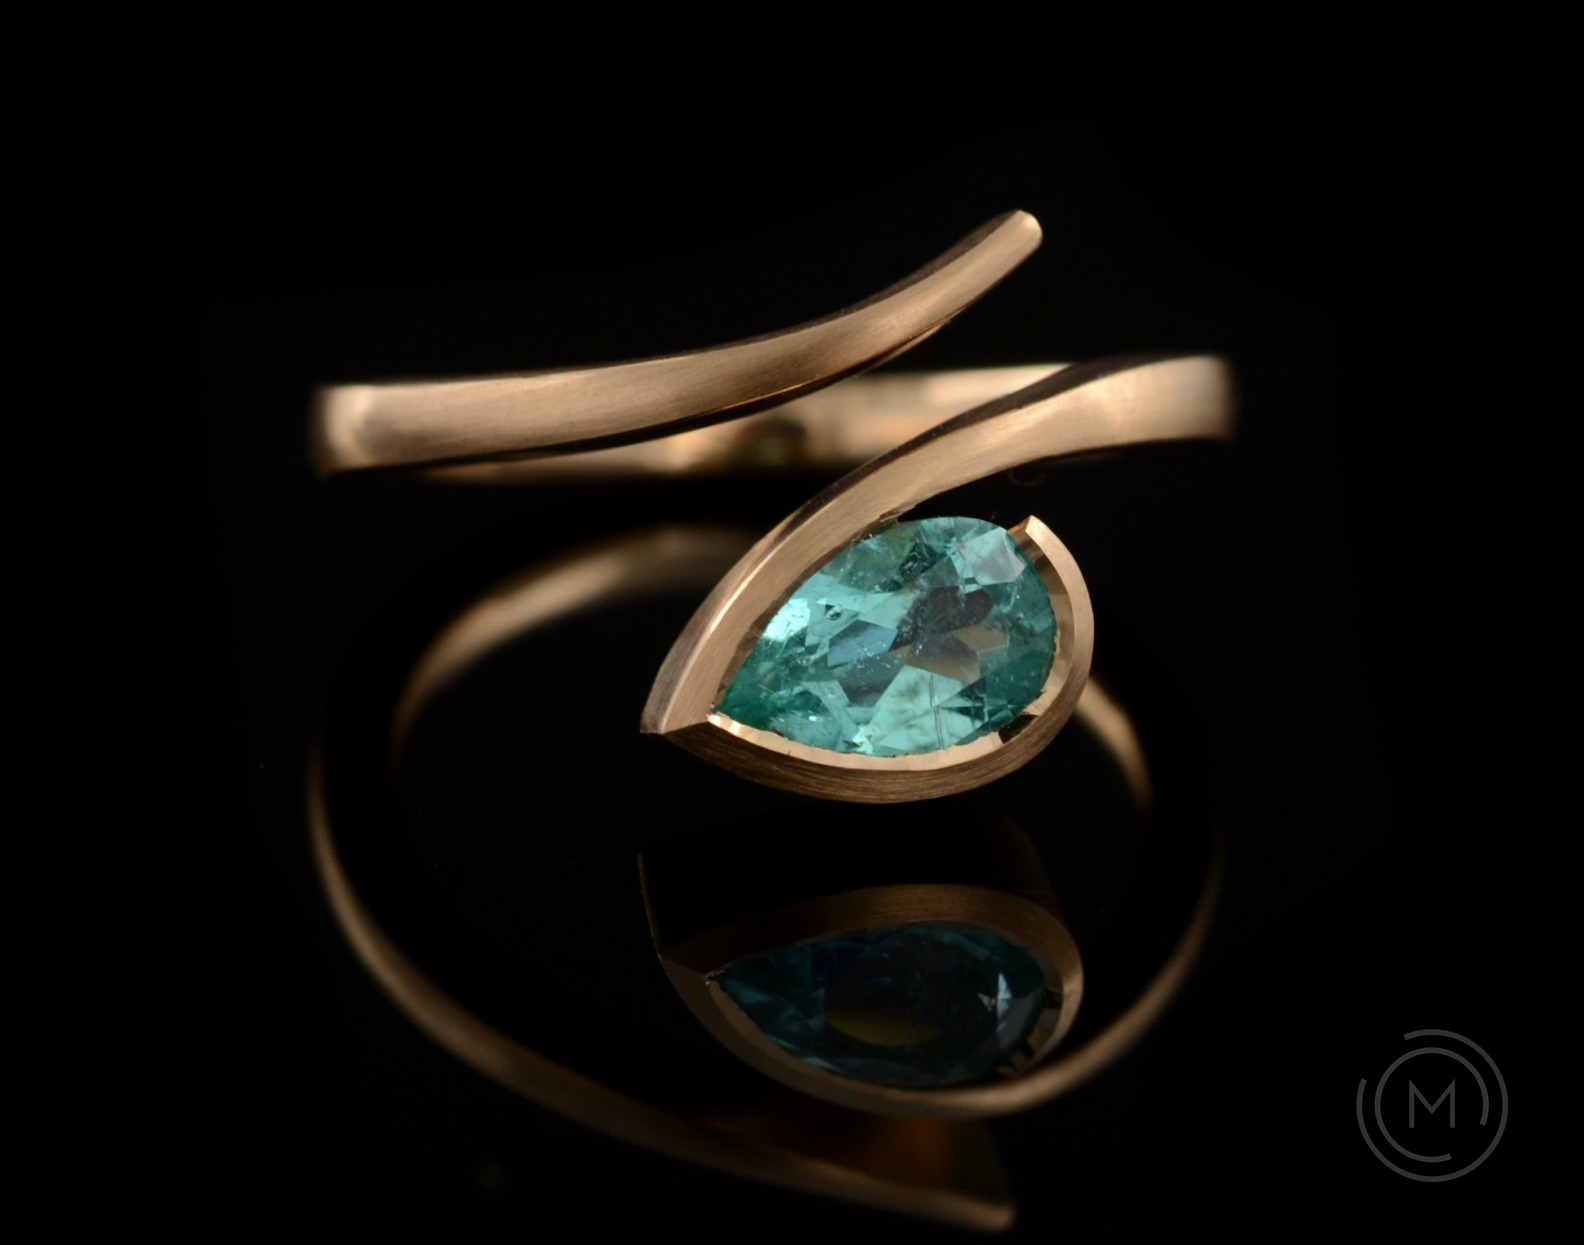 Bespoke rose gold engagement ring with blue paraiba tourmaline - McCaul Goldsmiths London